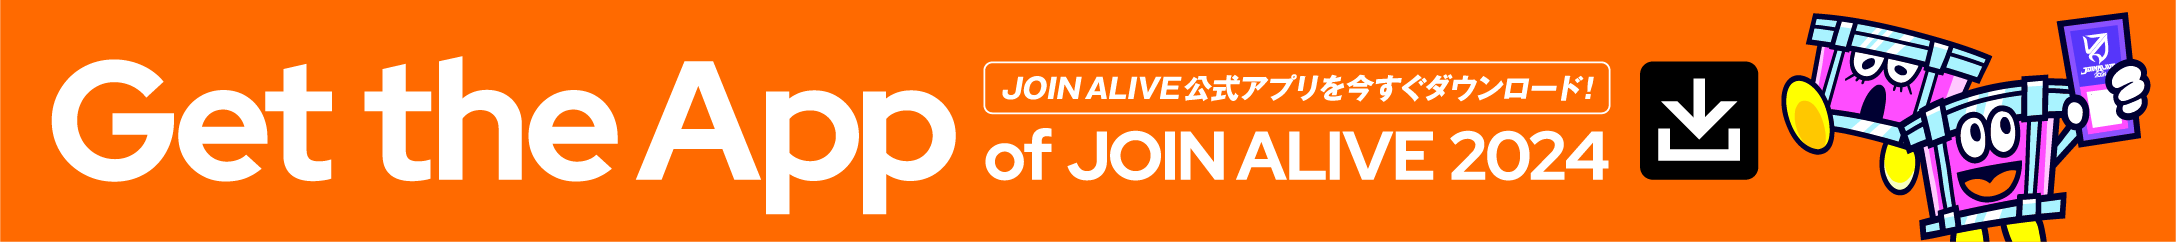 Get the App! JOIN ALIVE公式アプリを今すぐダウンロード！